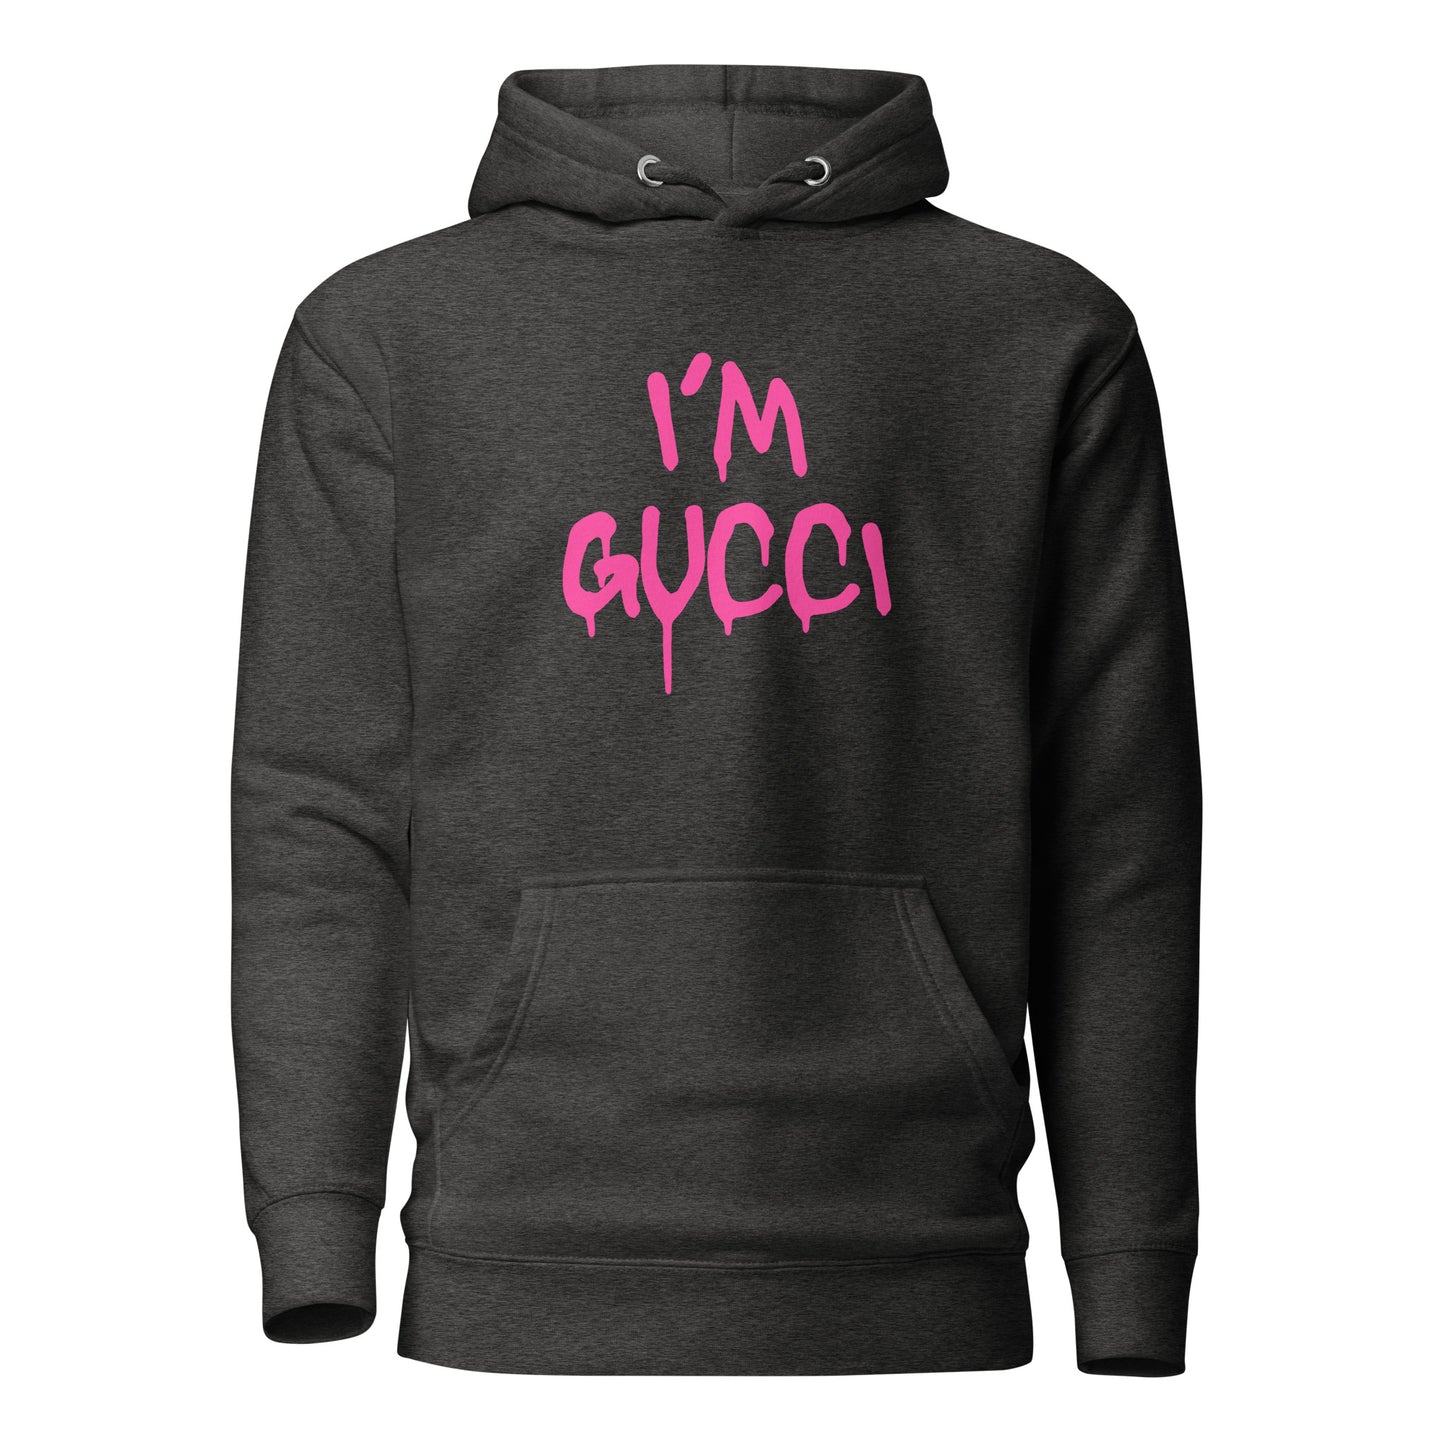 I'm Gucci Unisex Hoodie